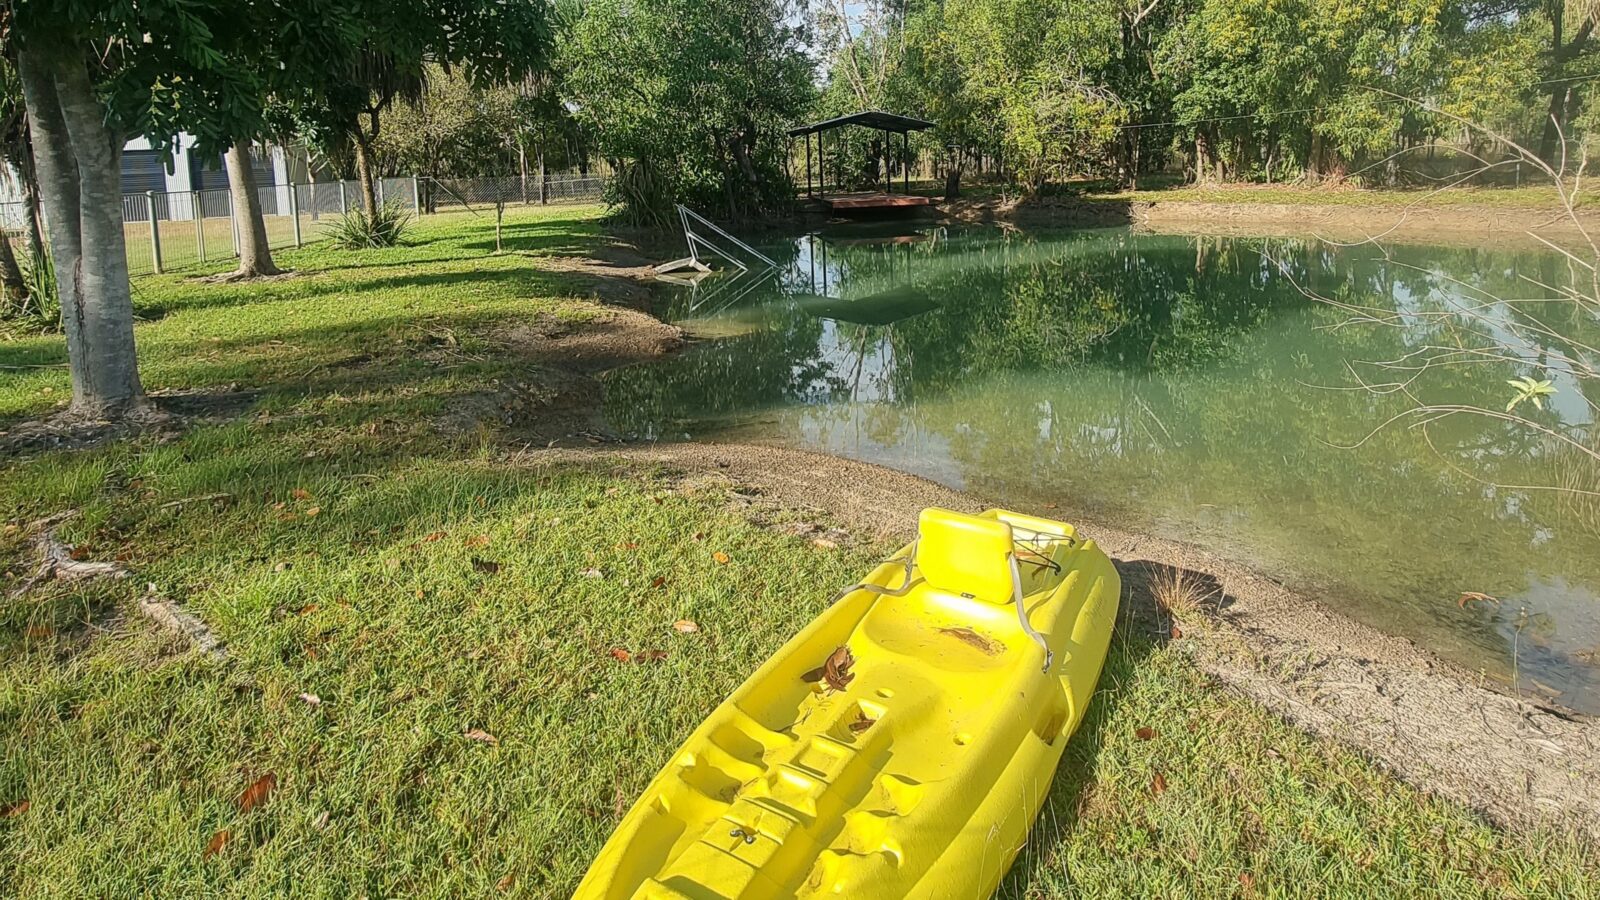 Kayak and zipline across the swimming hole